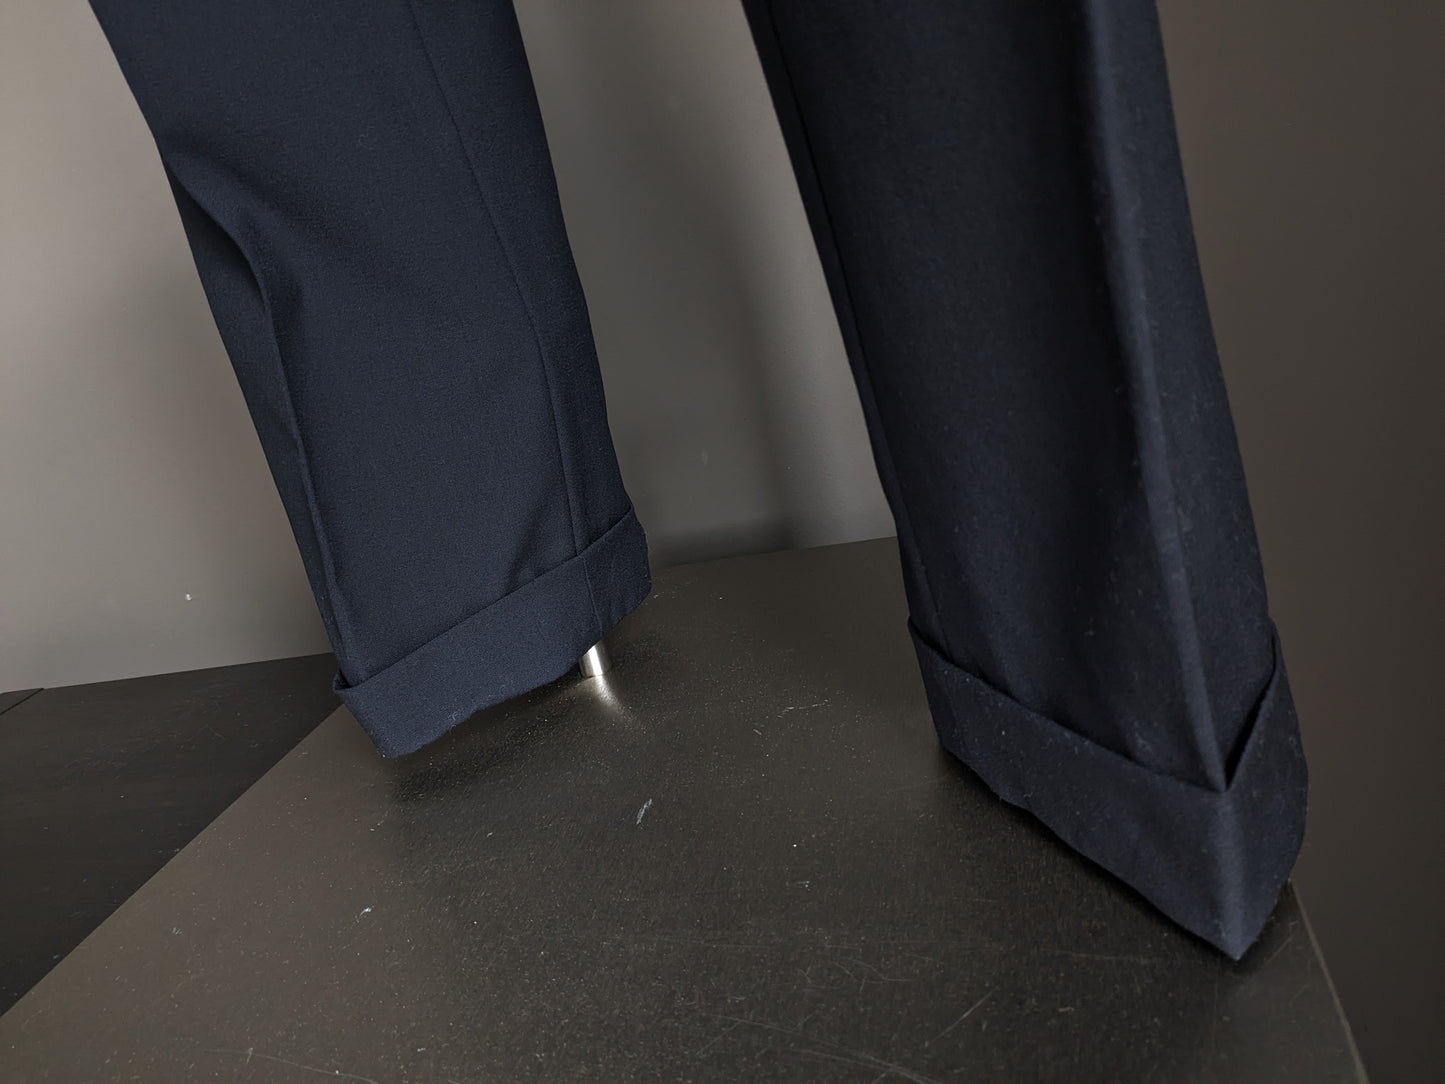 Pantalones de lana con cubierta. Color azul oscuro. Tamaño 52 / L. #500.